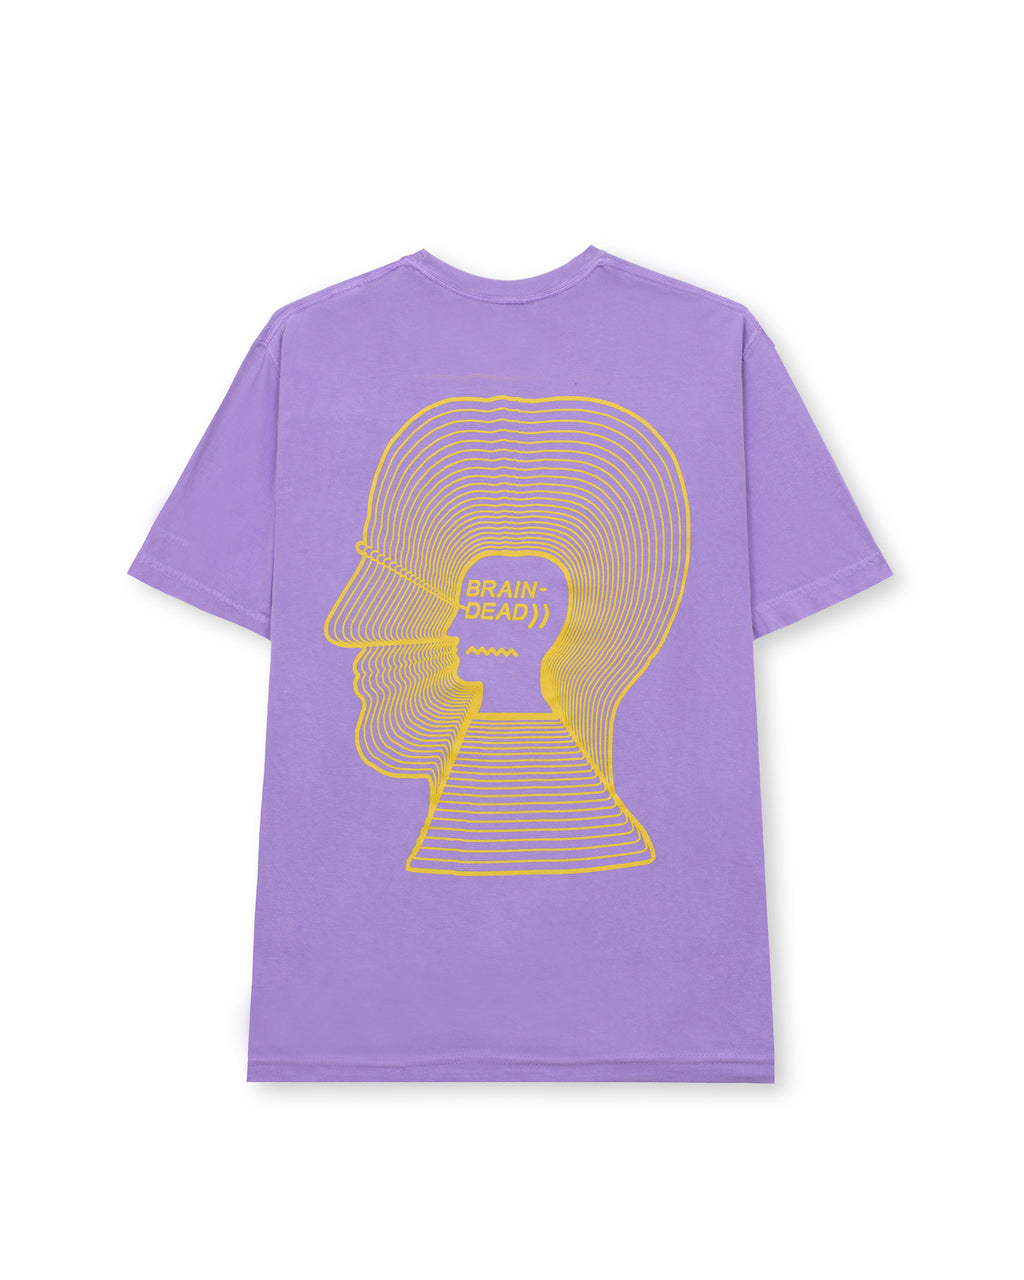 All Rise T-Shirt - Purple 2